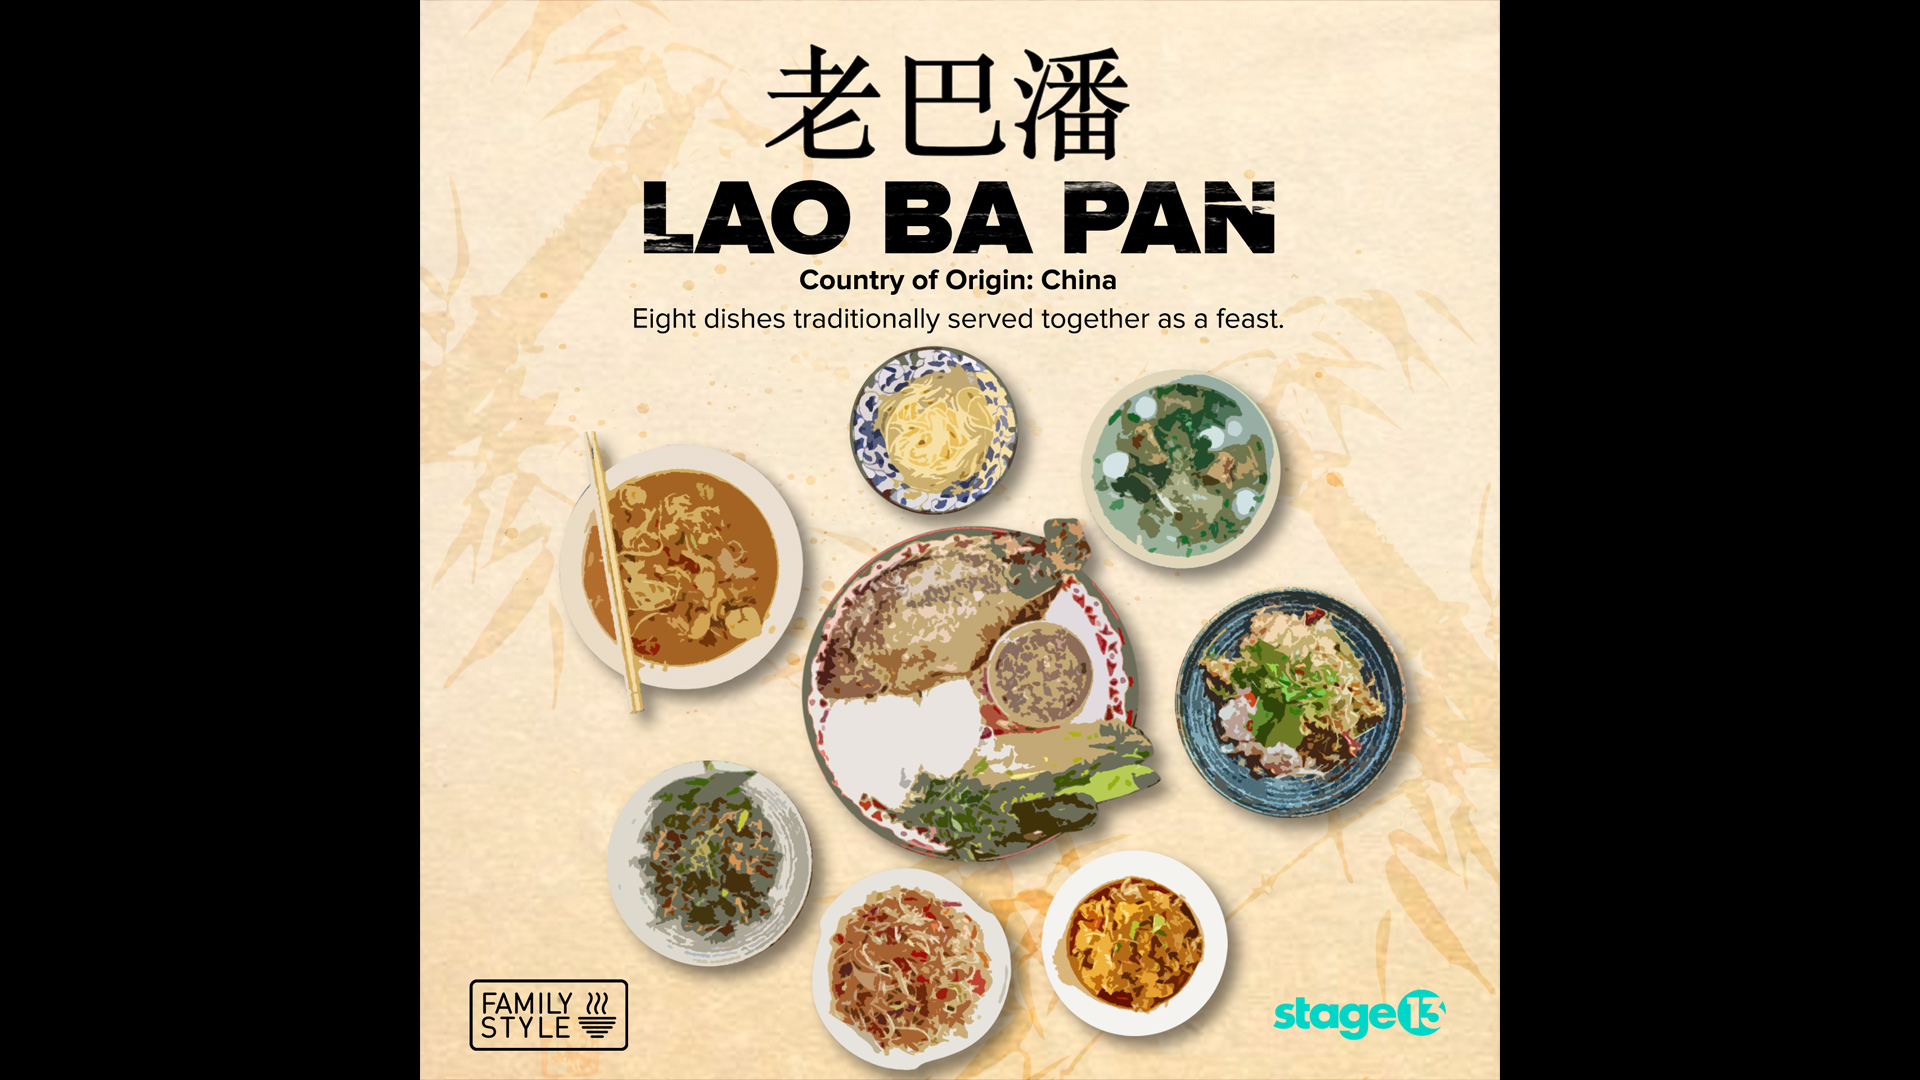 Lao Ba Pan